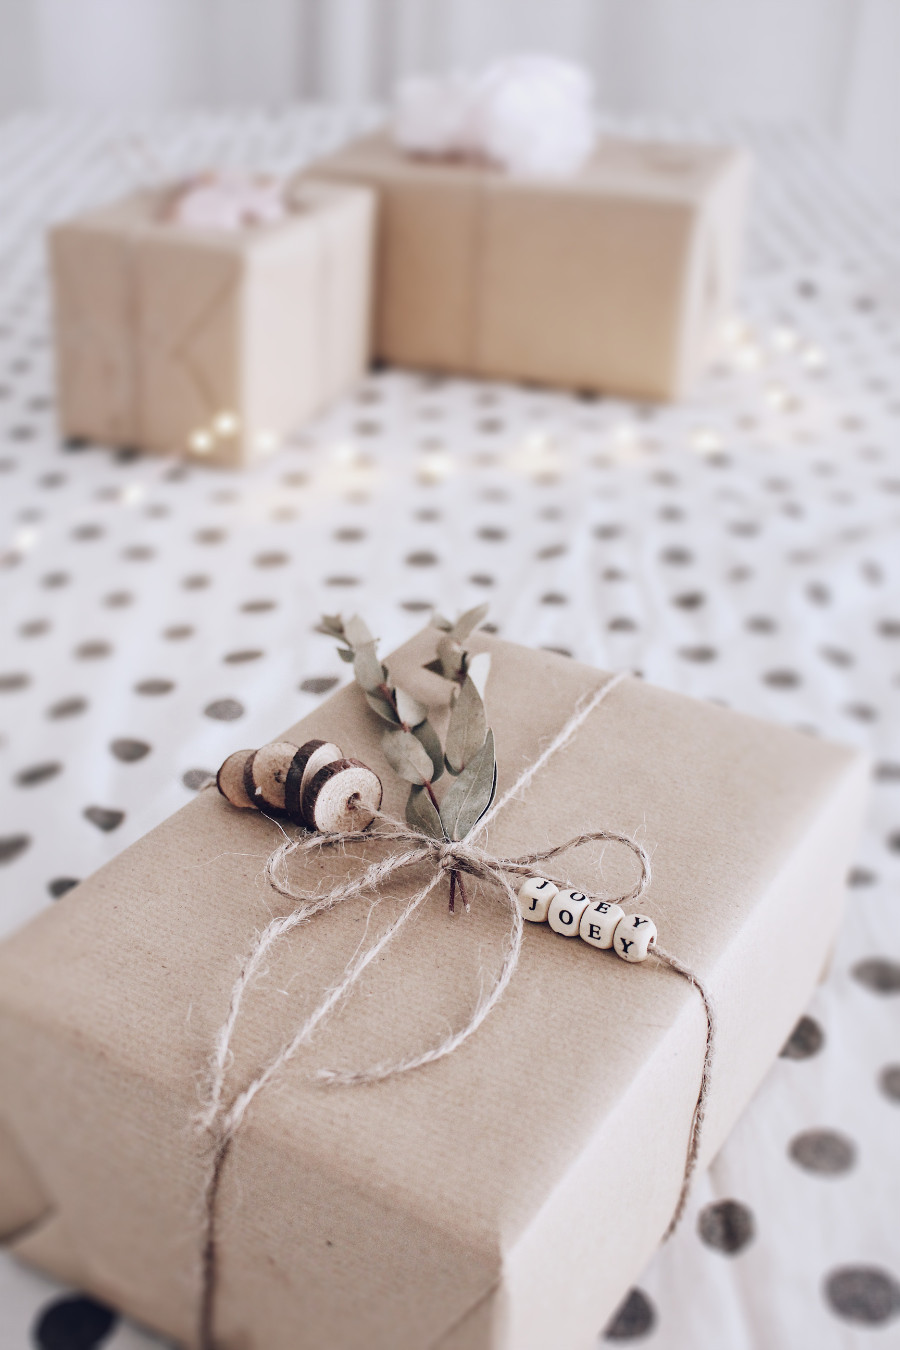 Geschenke Verpacken
 DIY Geschenke verpacken 3 kreative Ideen um Geschenke zu